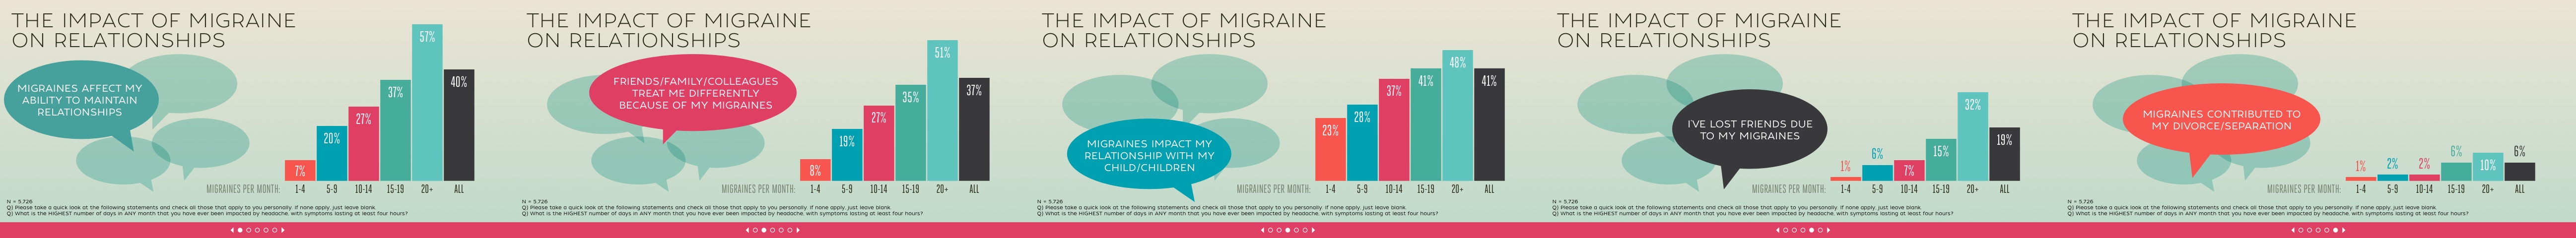 Migraine in America 2015